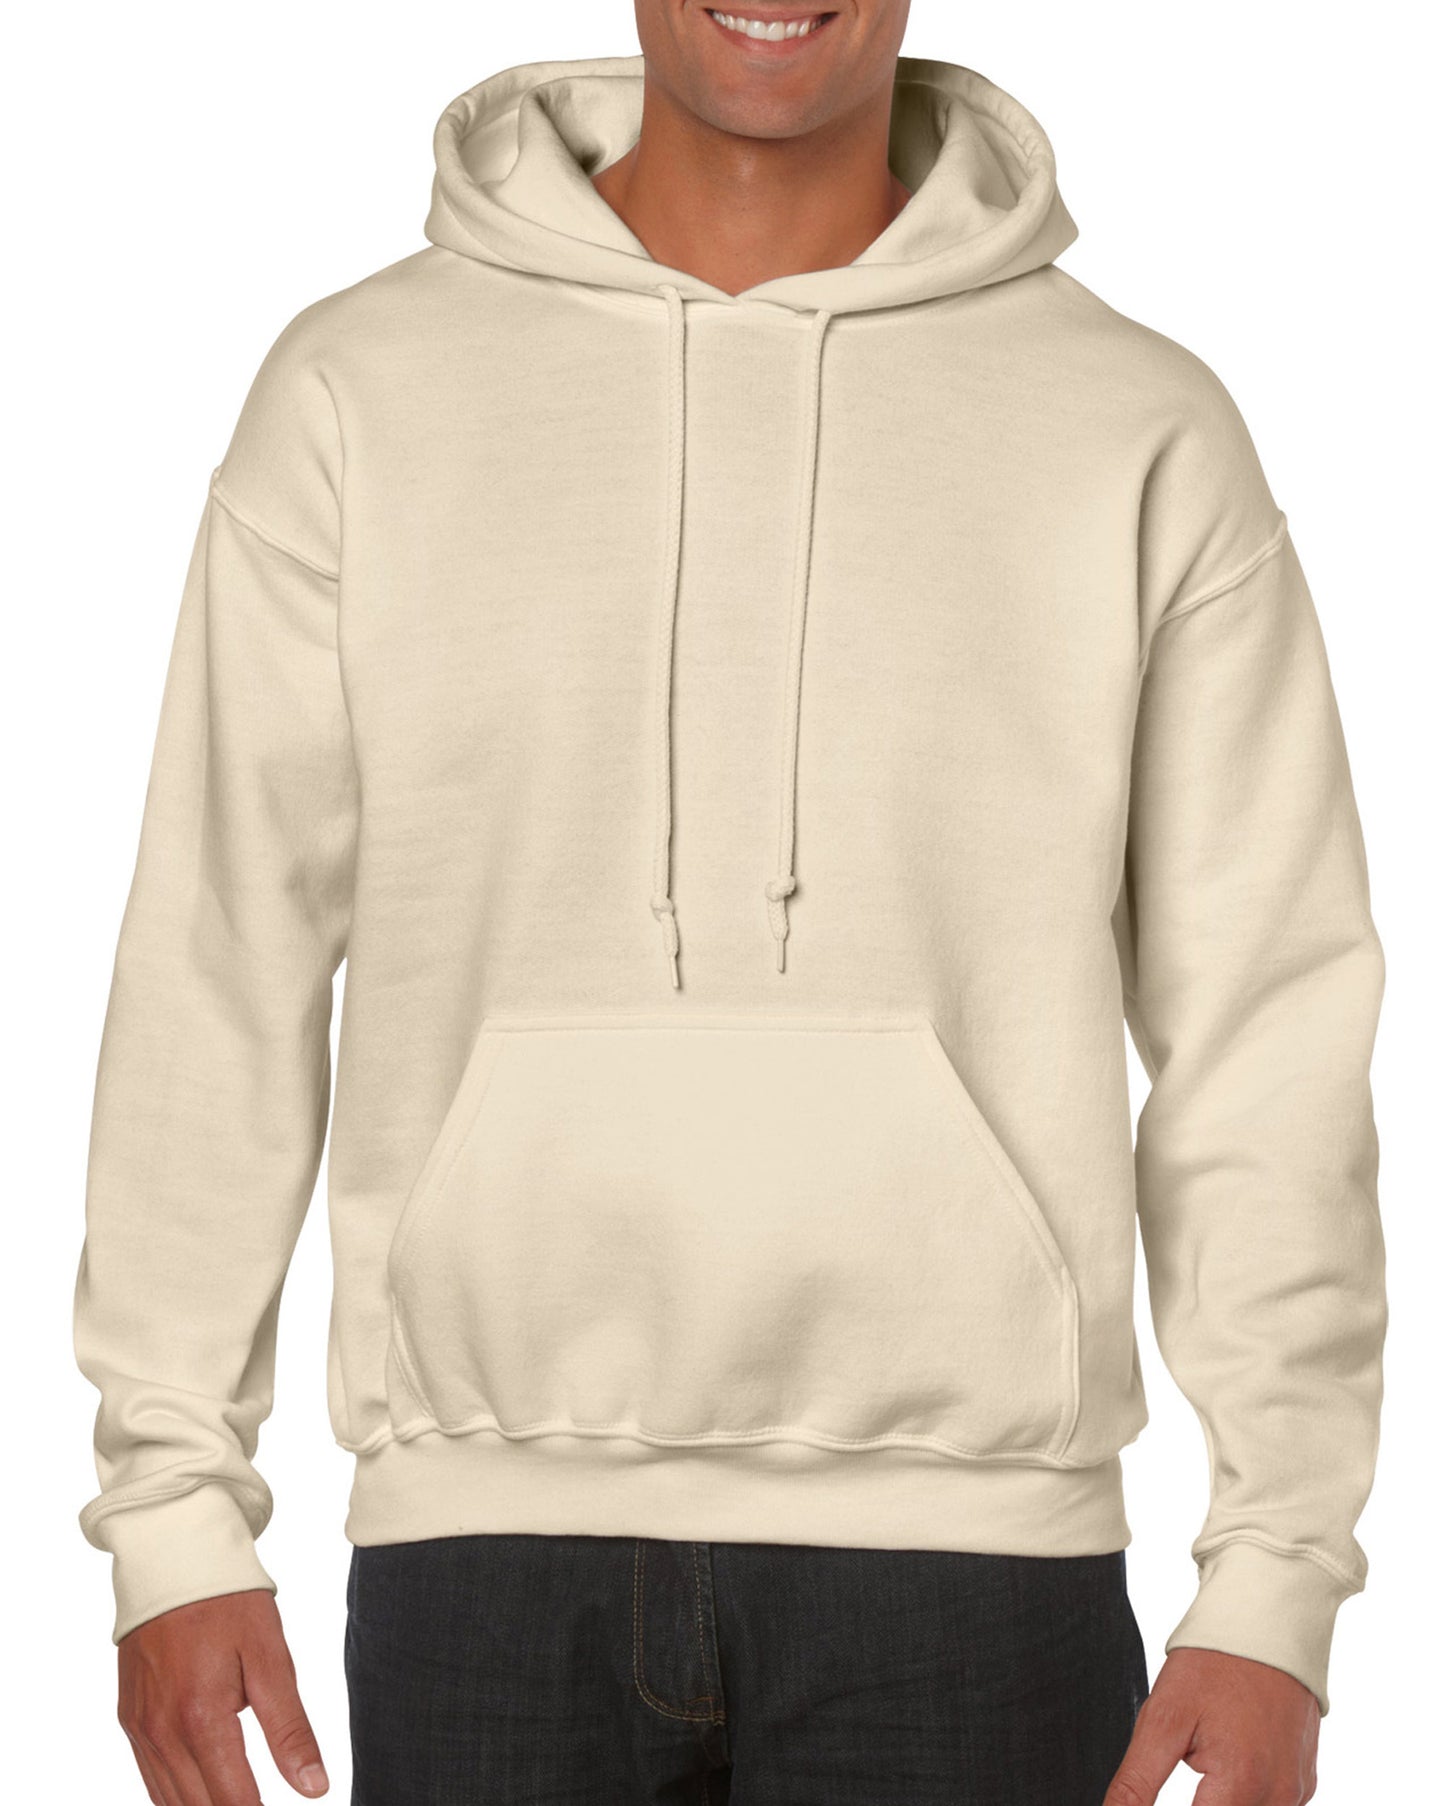 Mens Hooded Sweatshirt 3XL - 5XL